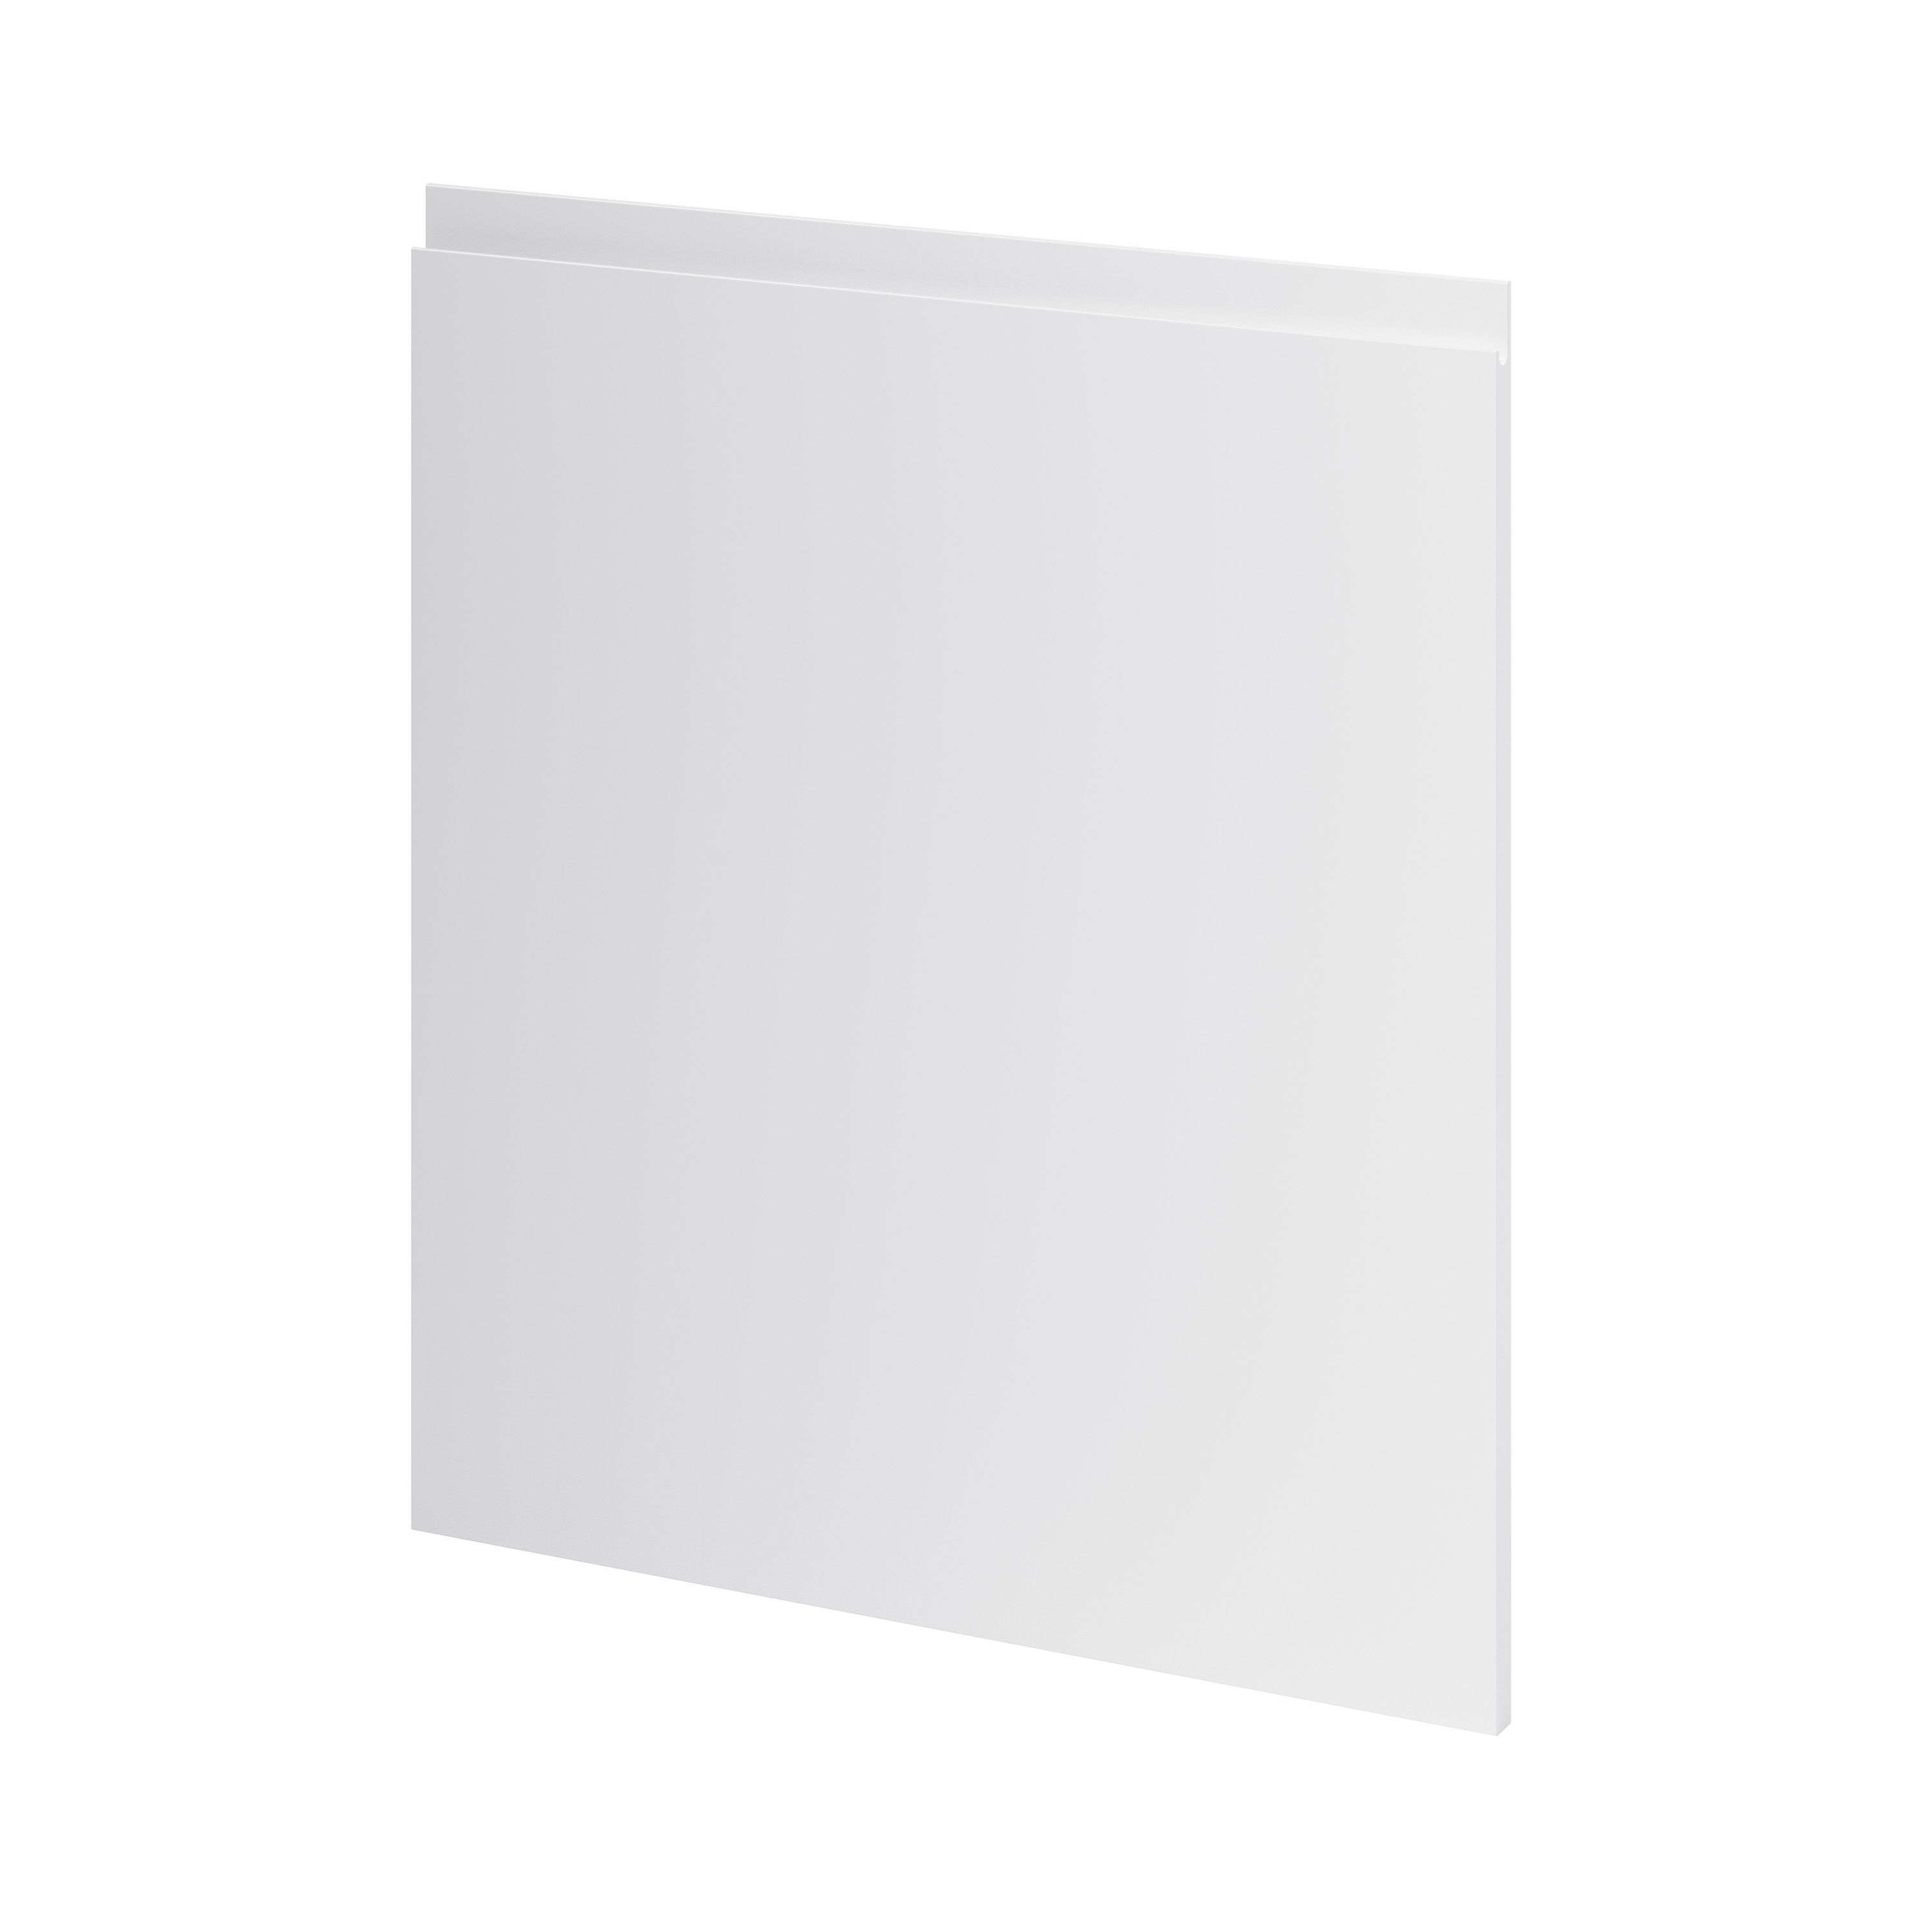 GoodHome Garcinia Gloss light grey integrated handle Appliance Cabinet door (W)600mm (H)687mm (T)19mm